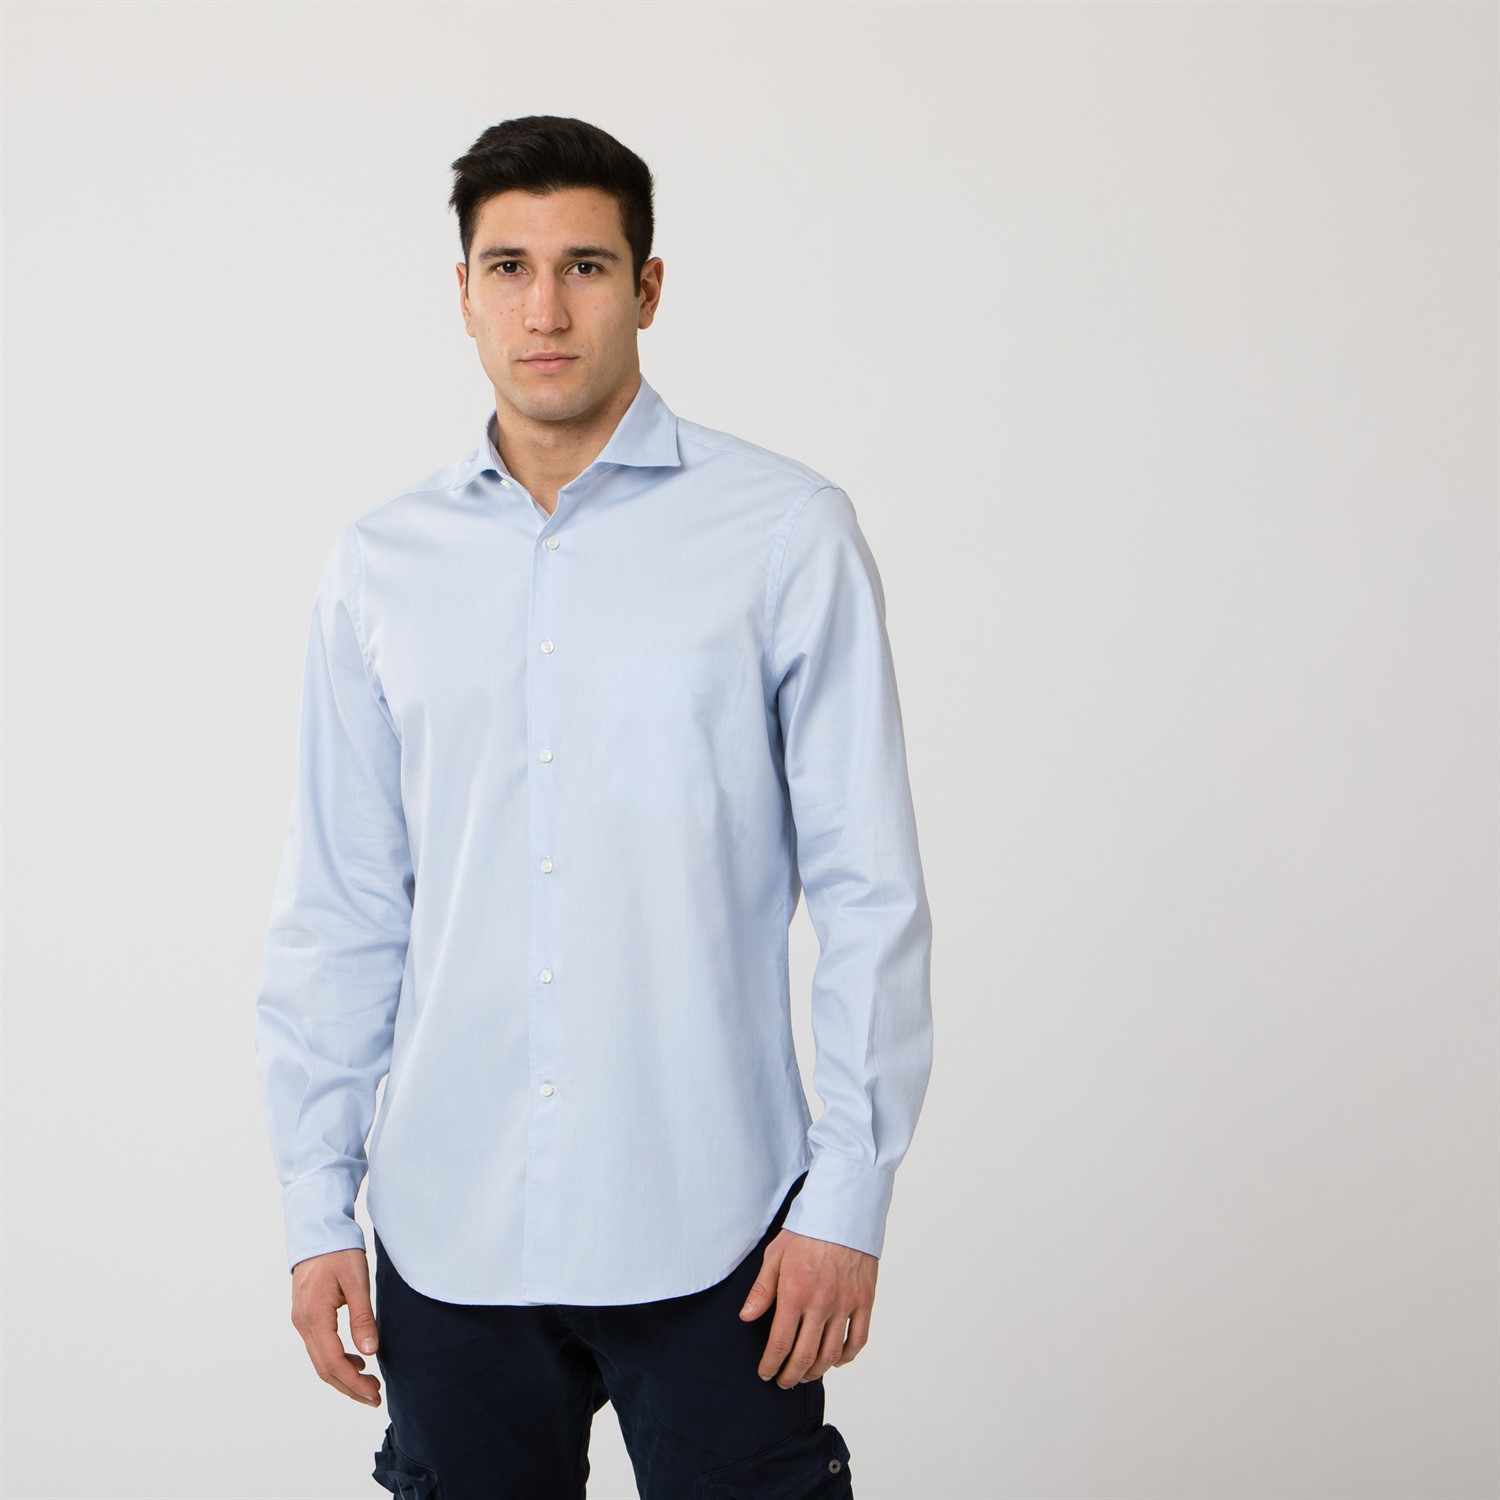 French collar shirt | Shirts | Clothing Man | Vertical Fashion